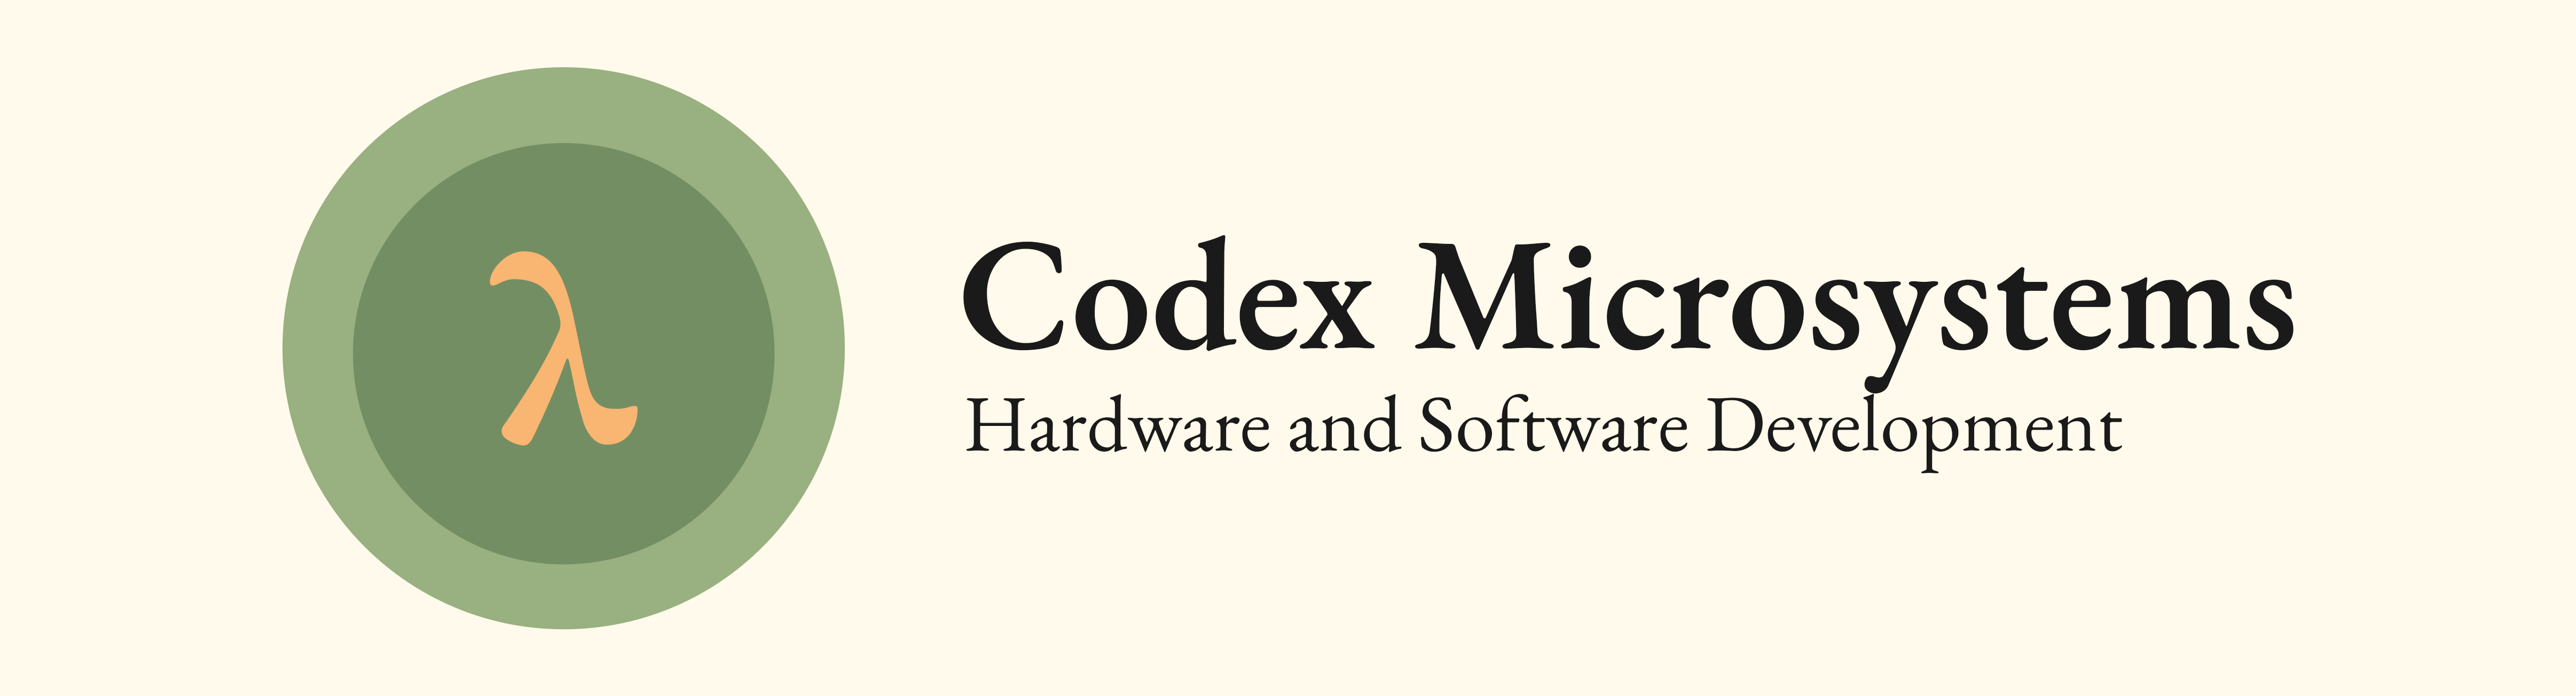 Codex Microsystems Logo